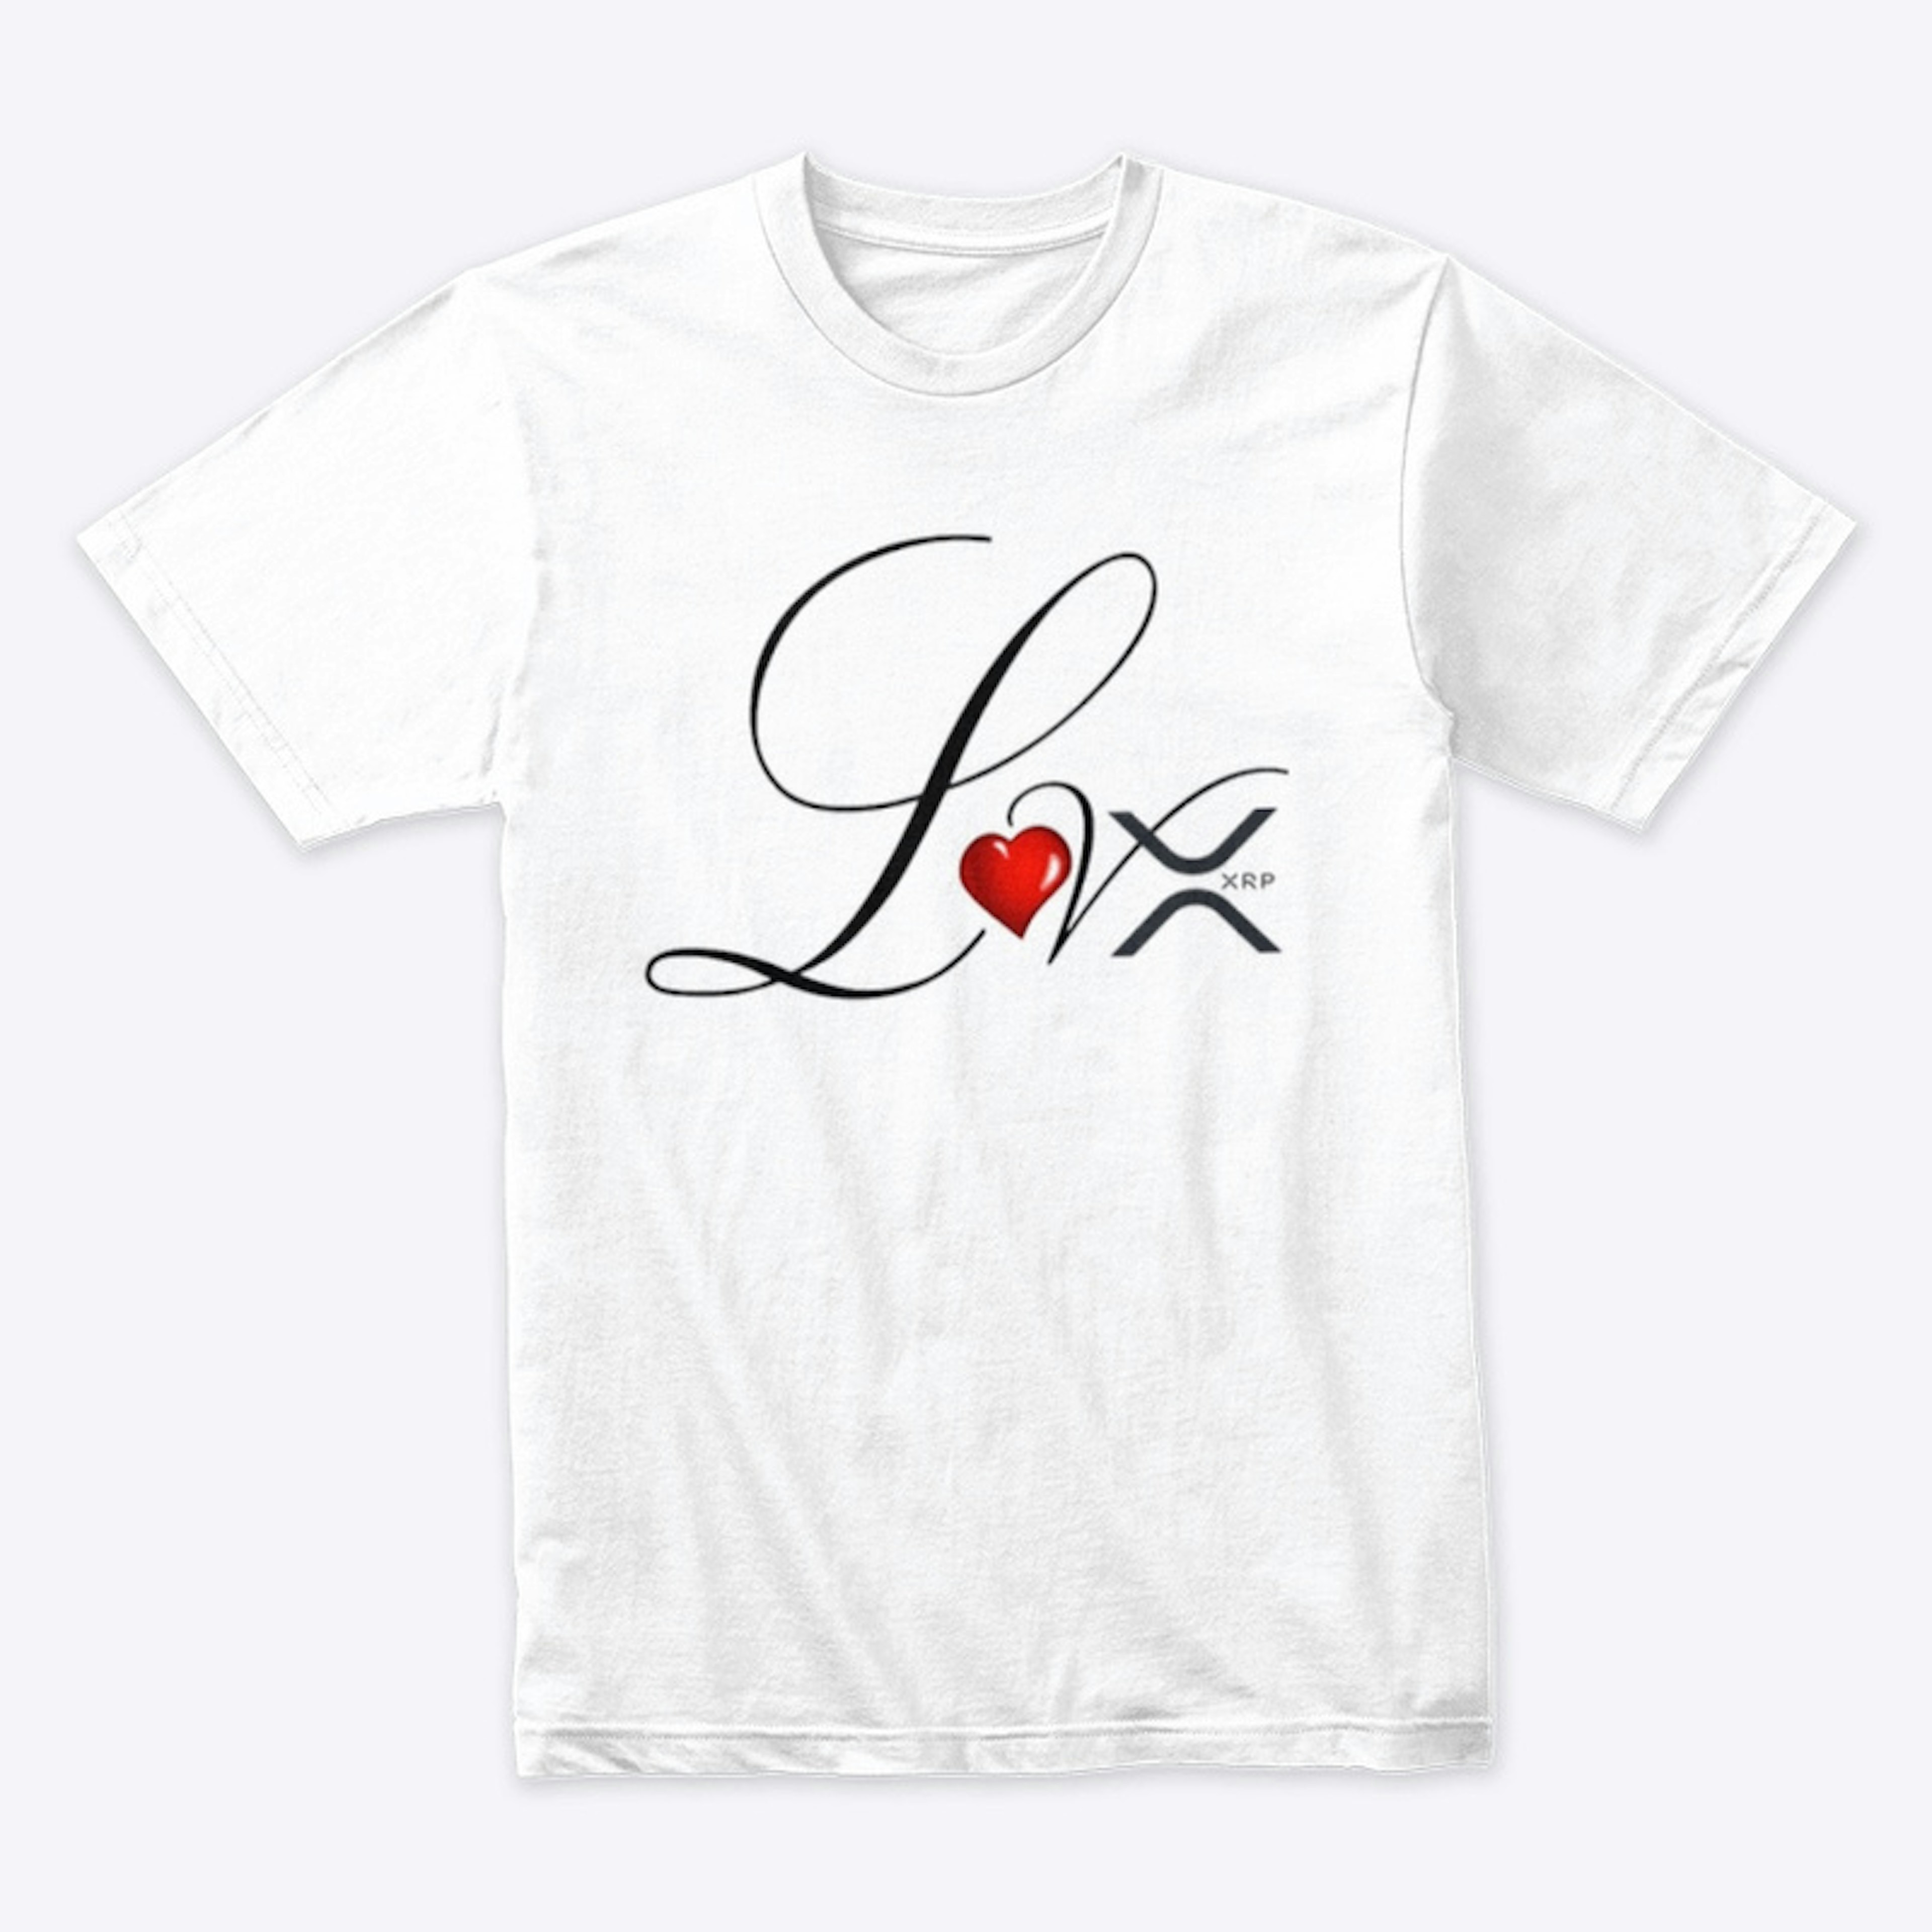 Prem RingSpun Ctn T-Shirt LOVE XRP (1) ​